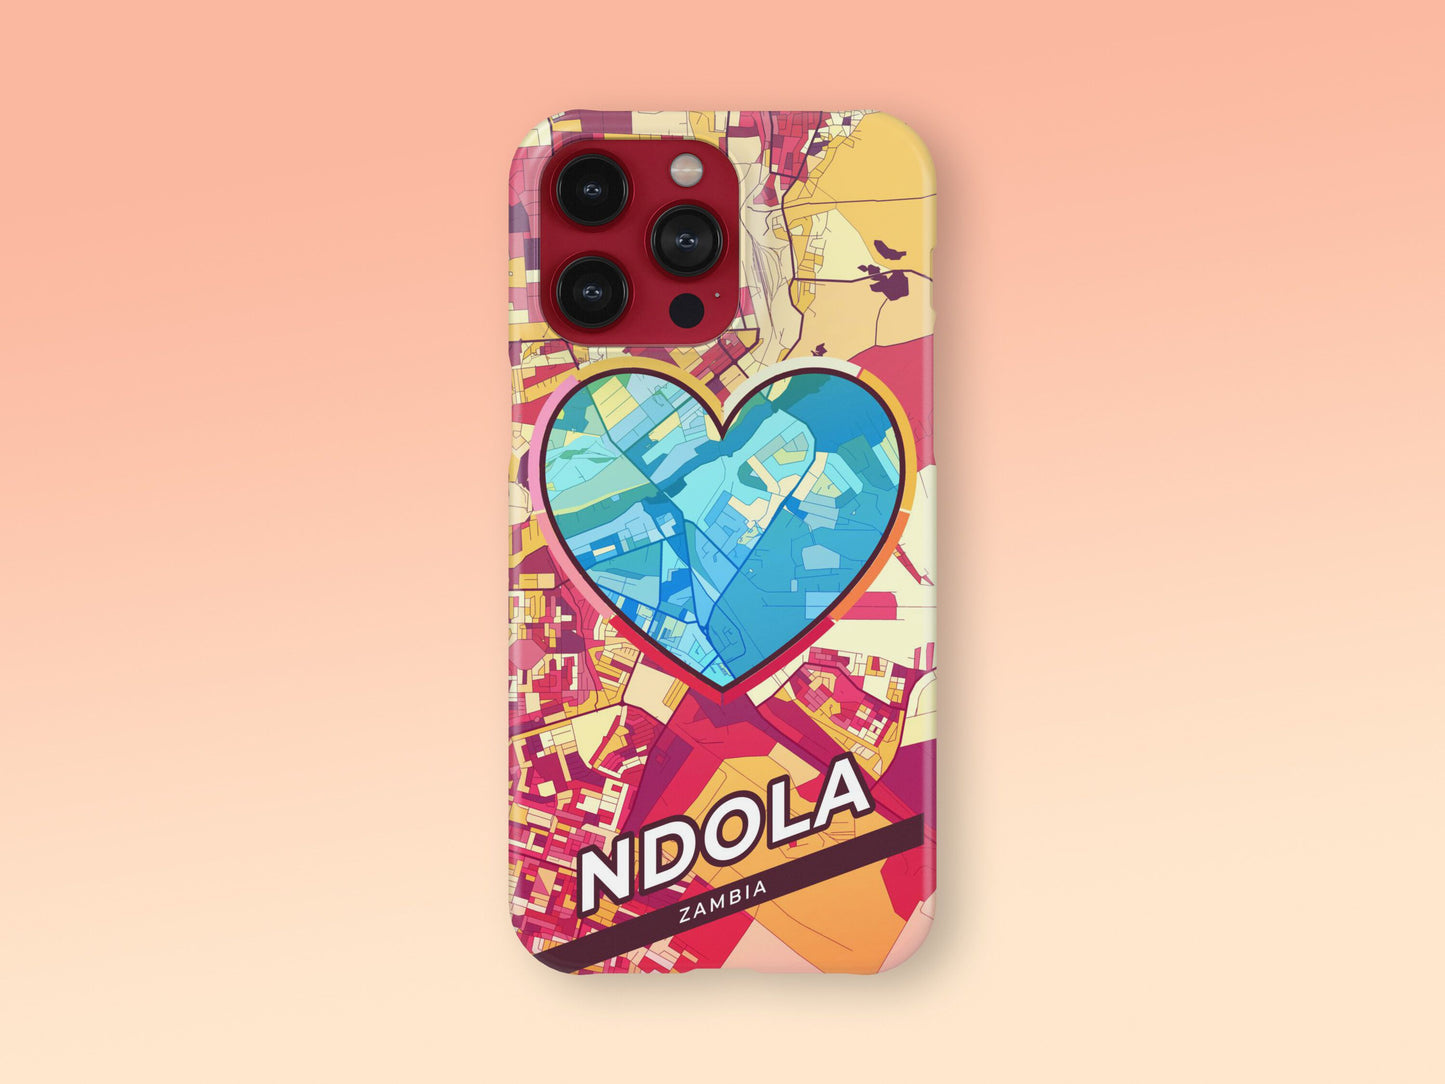 Ndola Zambia slim phone case with colorful icon 2